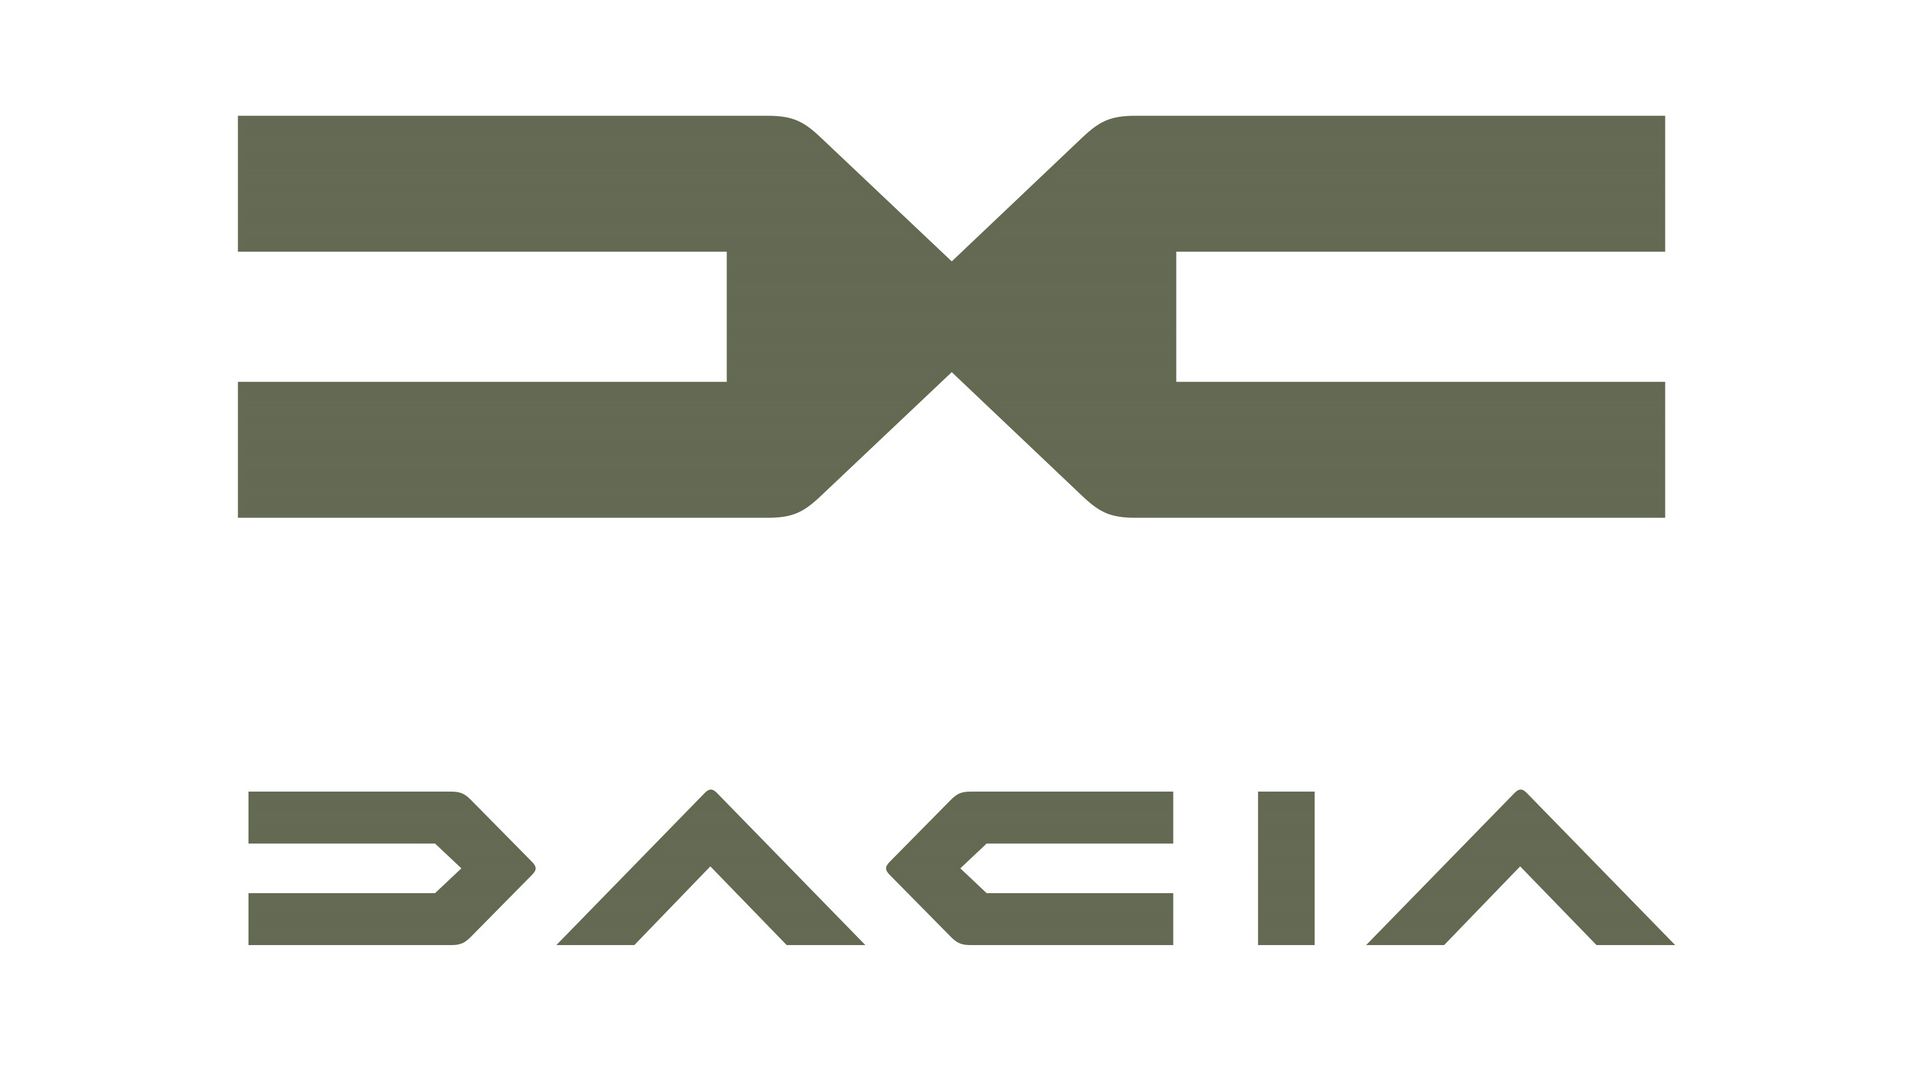 Логотип Dacia